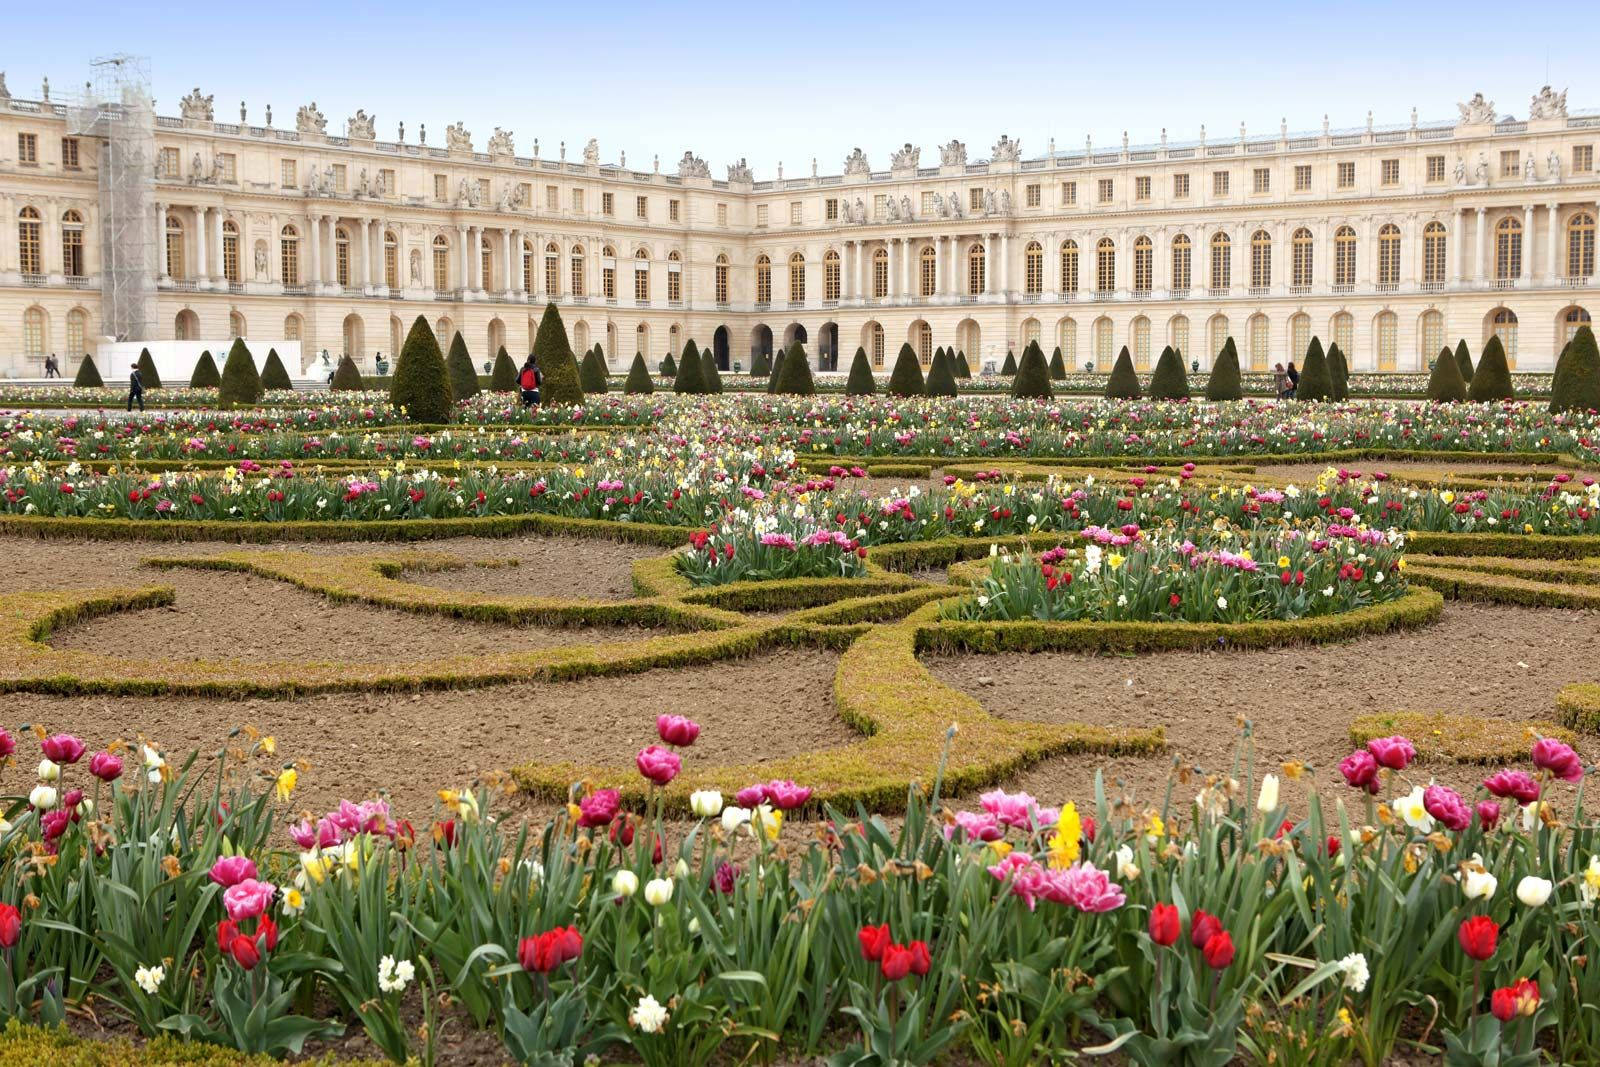 Blomsterparterrenvid Palatset I Versailles. Wallpaper